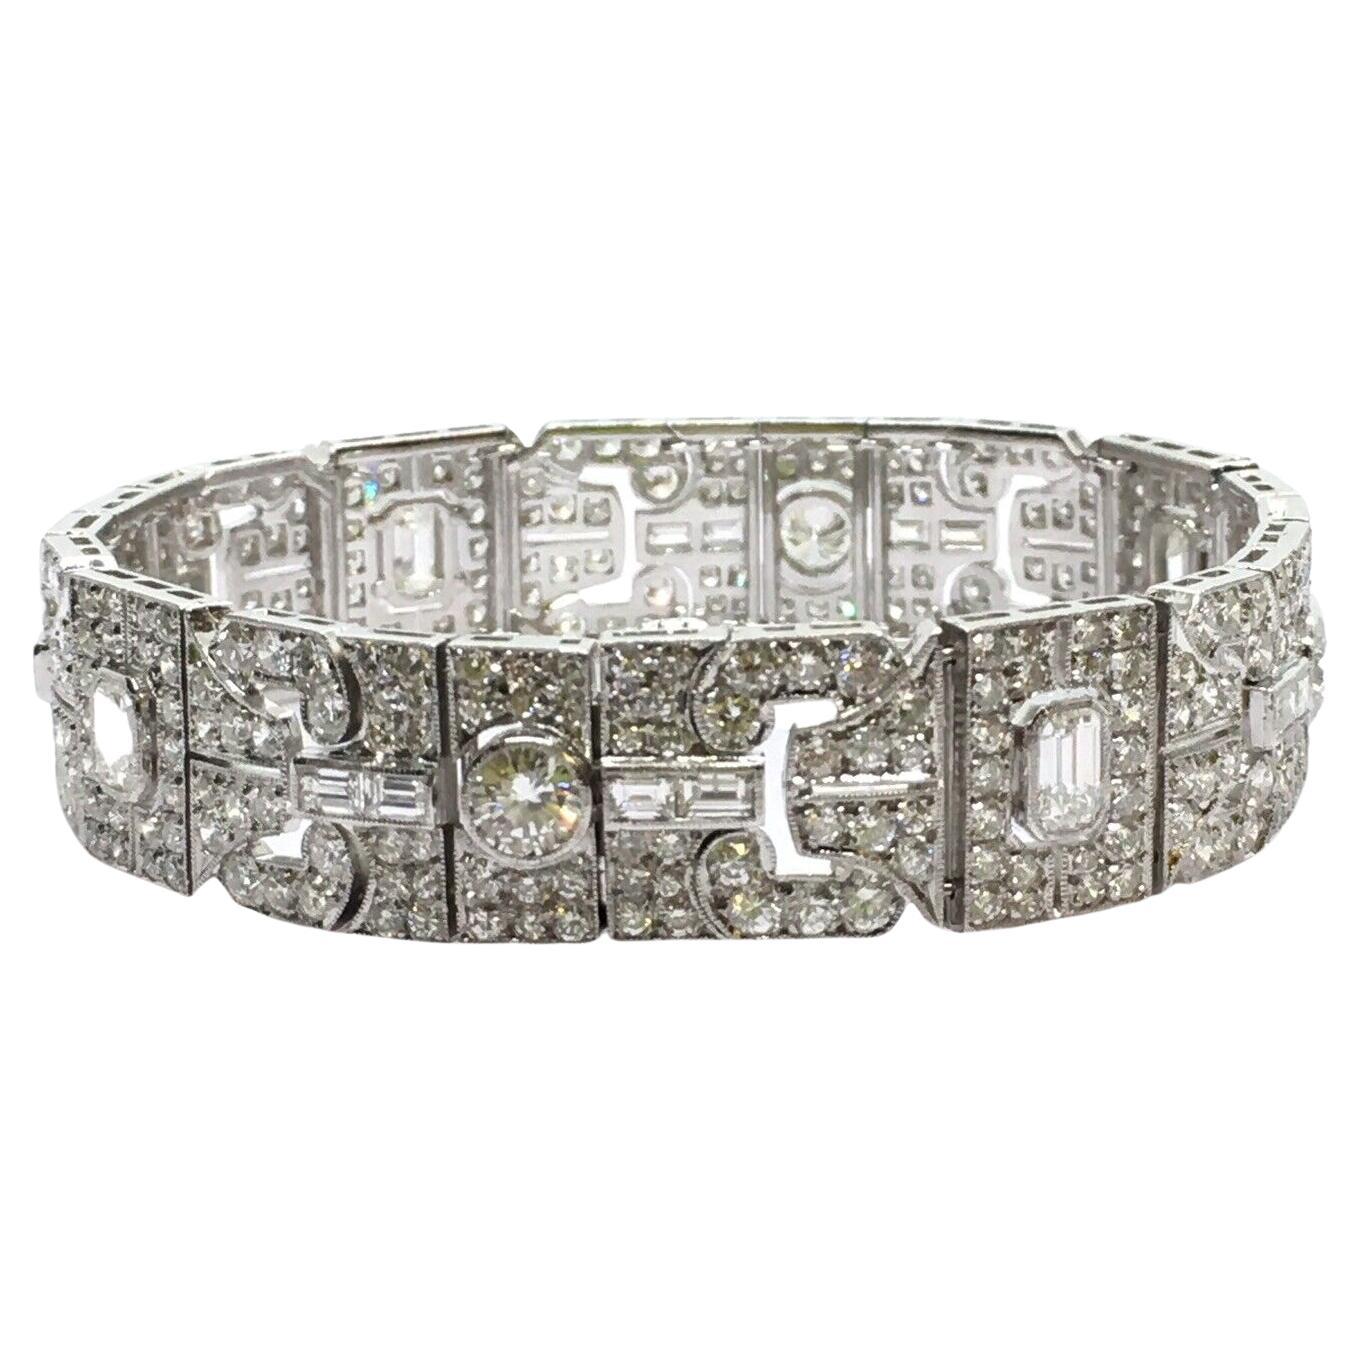 14K White Gold 12.5 Carat Diamond Bracelet 6.25 Inch New Art Deco Style For Sale